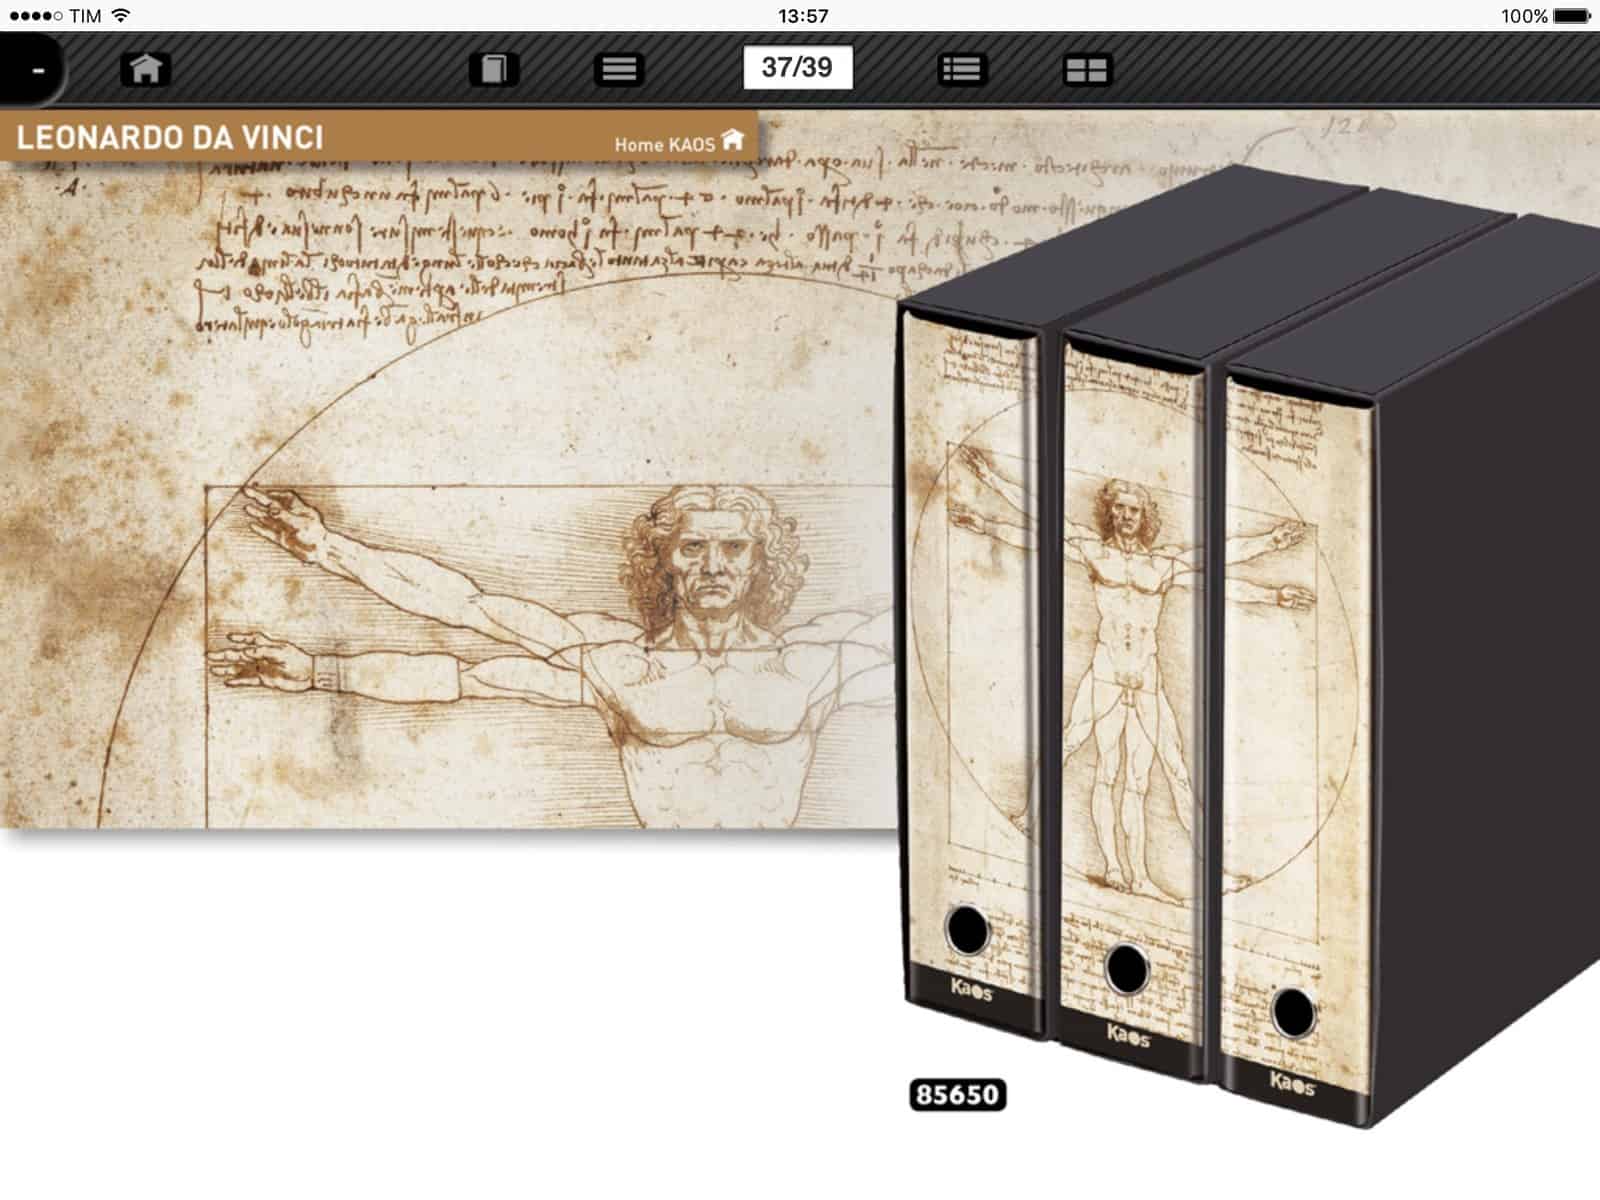 Kaos - Tris raccoglitori ad anello Uomo di Vitruvio Leonardo da Vinci. KAOS  - 85650 - Villa Varese